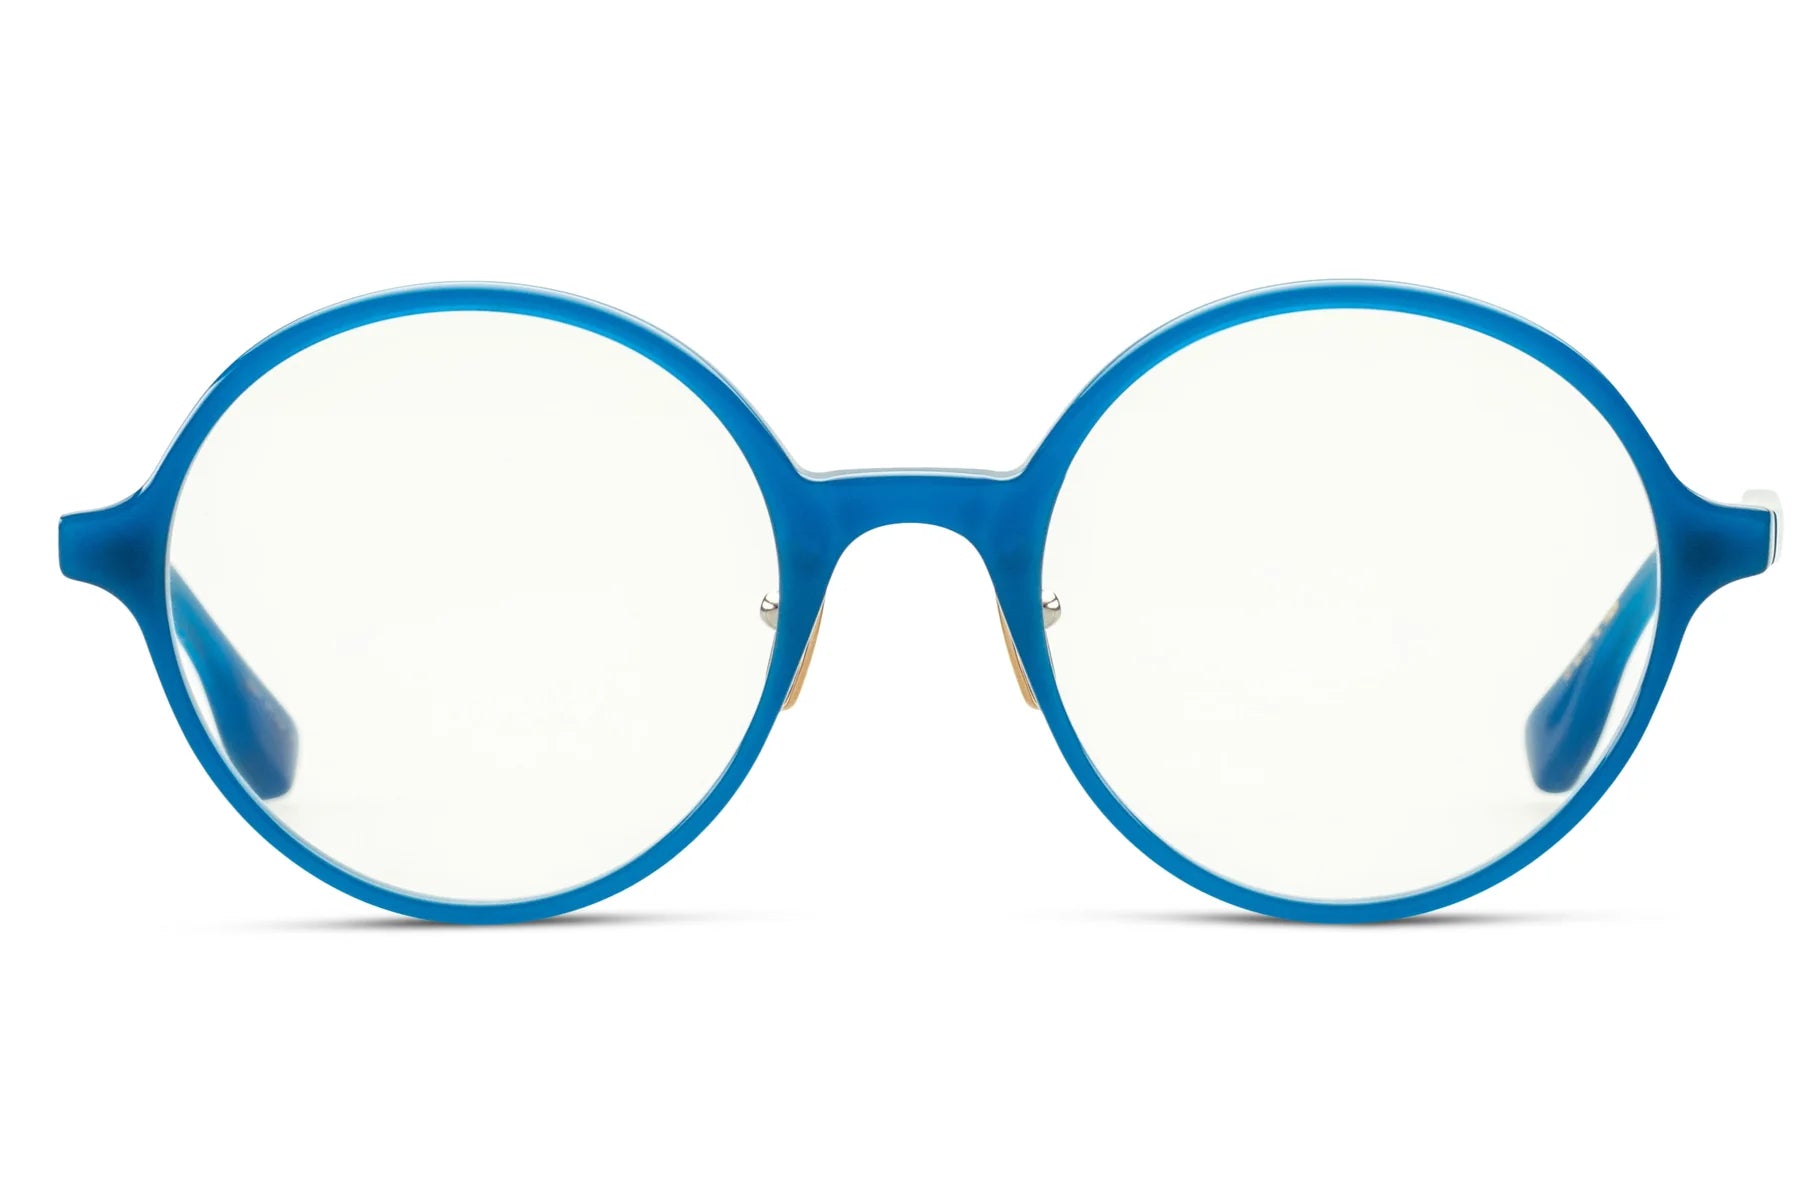 Buy DITA  VATIZA, a  Mariner Blue; Acetate Optical Frame with a Round shape. Adair Eyewear - 40+ Years History